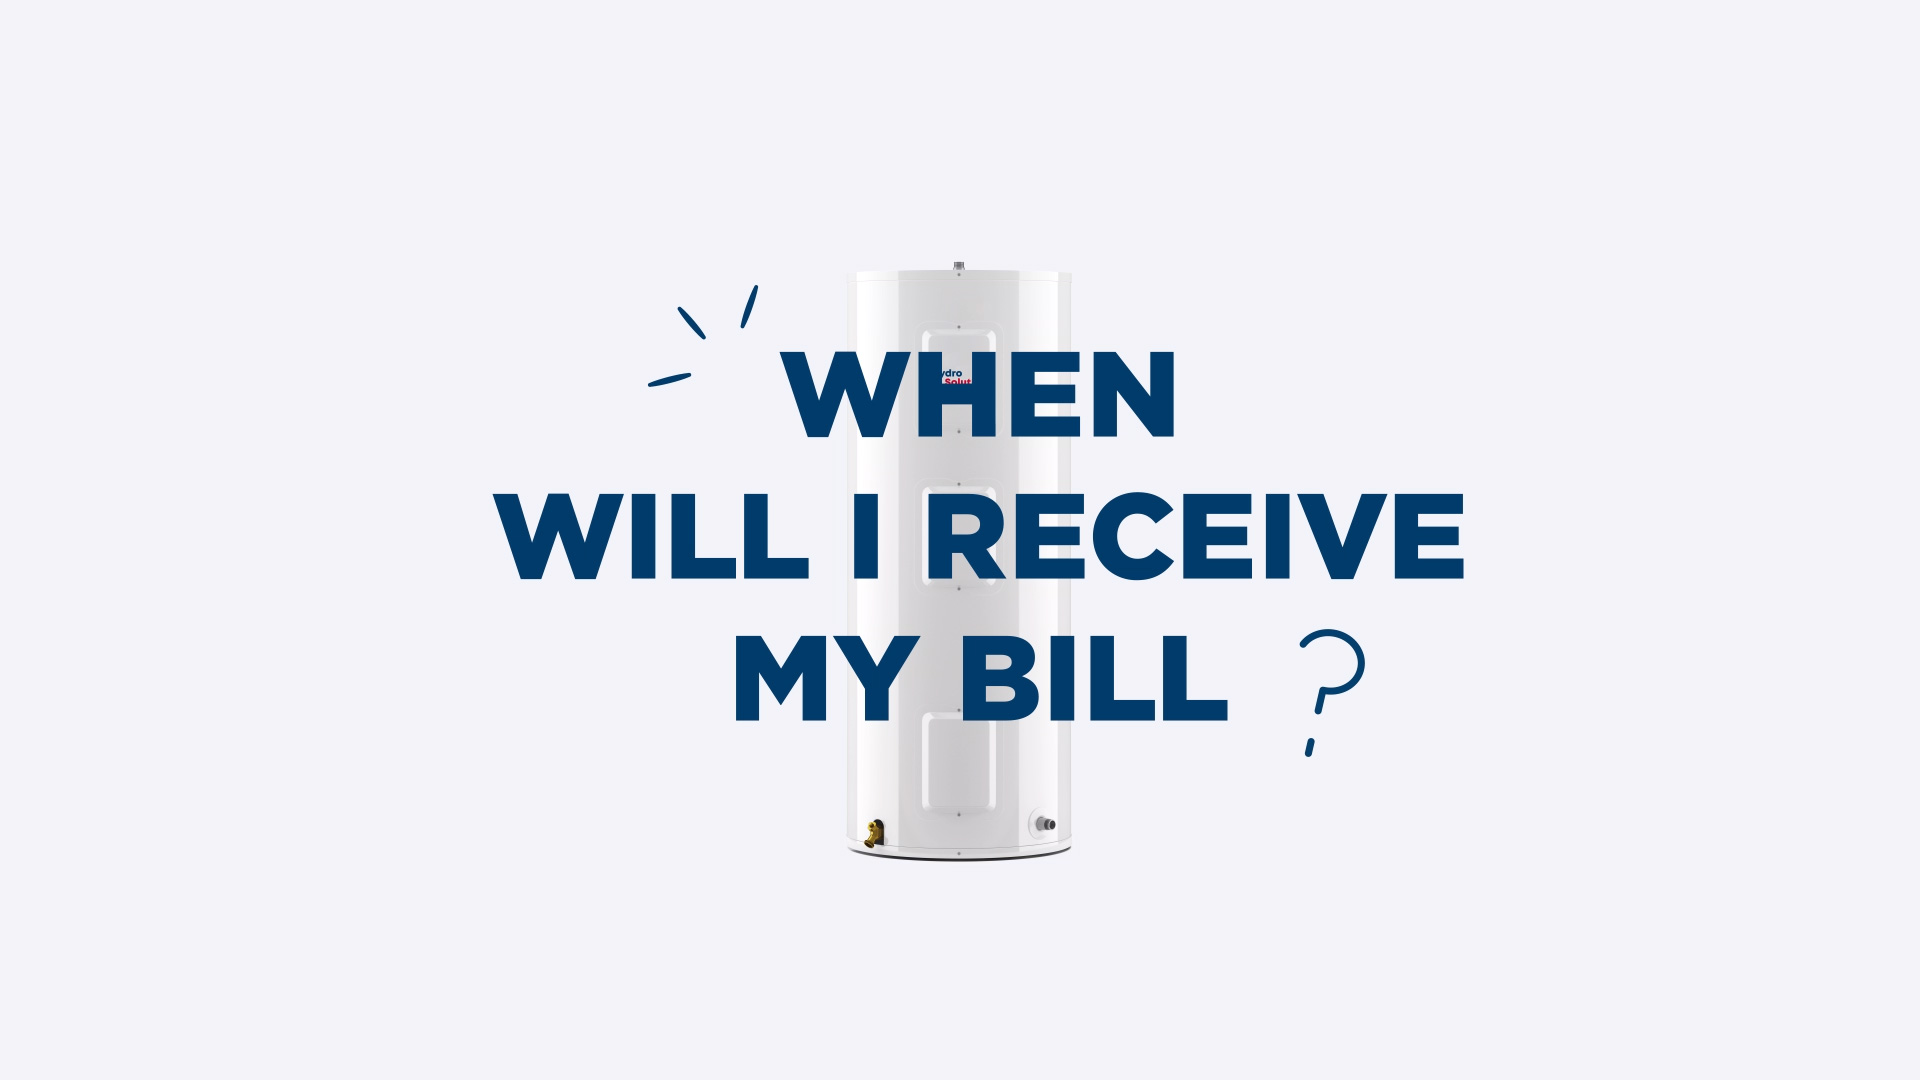 When will I receive my bill?